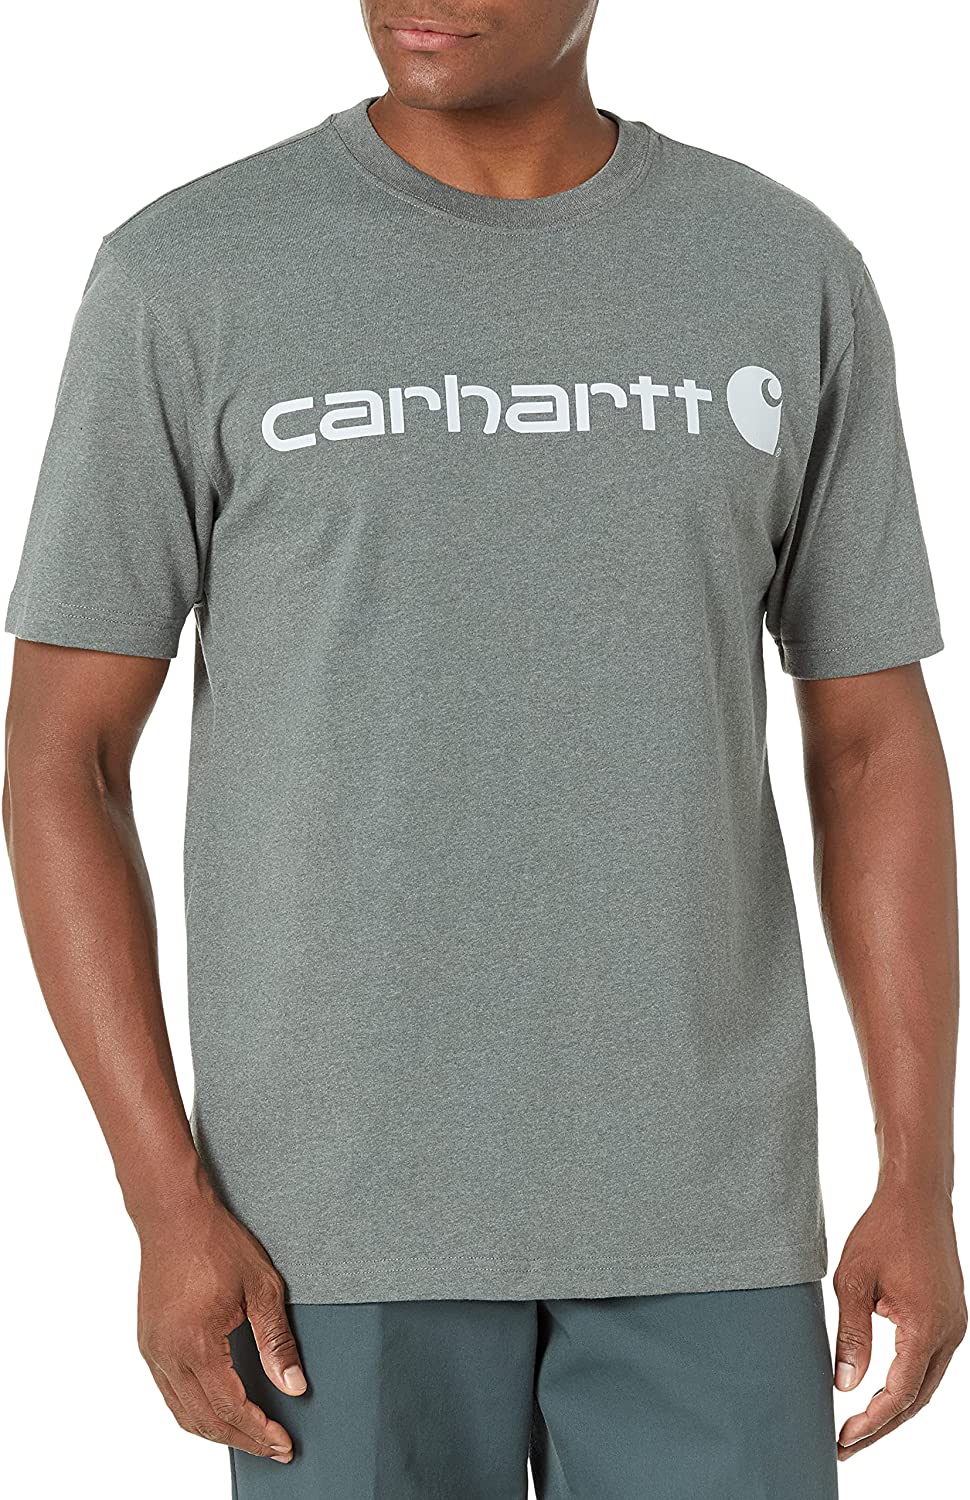 Carhartt Mens LOOSE FIT Short-Sleeve K195 T-Shirt GREY WITH BLACK LOGO NWT